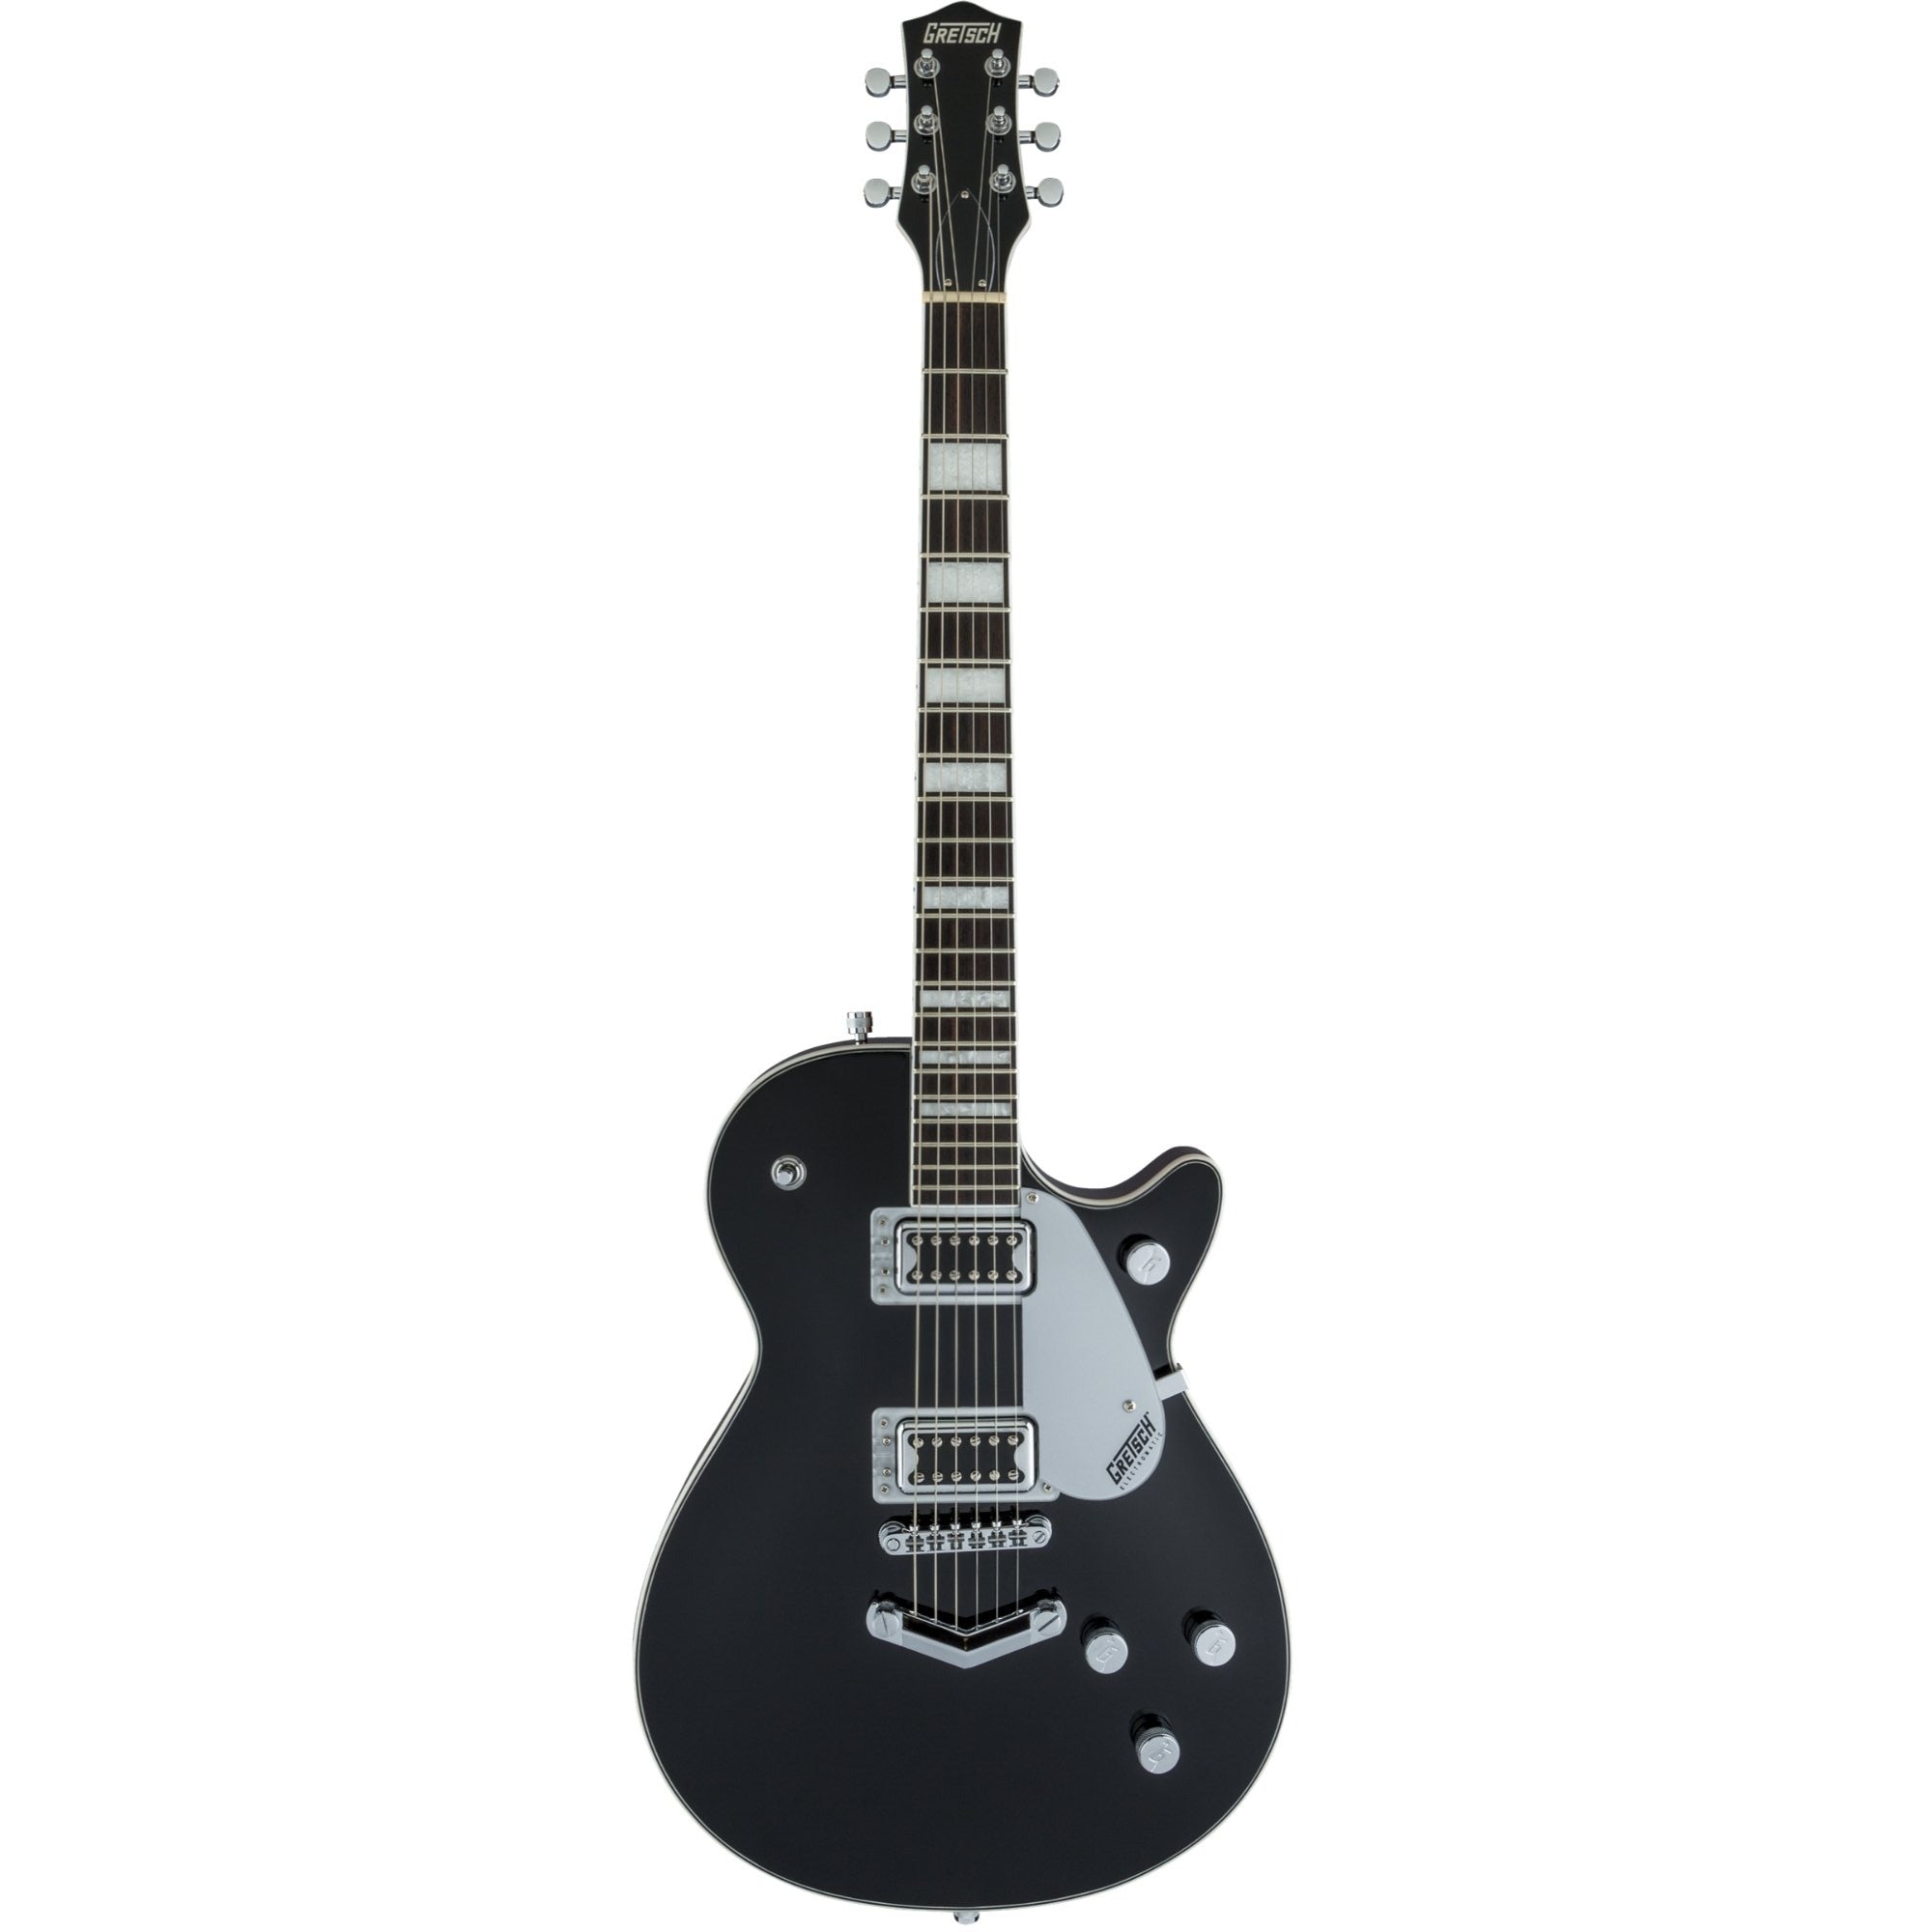 Gretsch G5220 Jet Electromatic Black Guitar